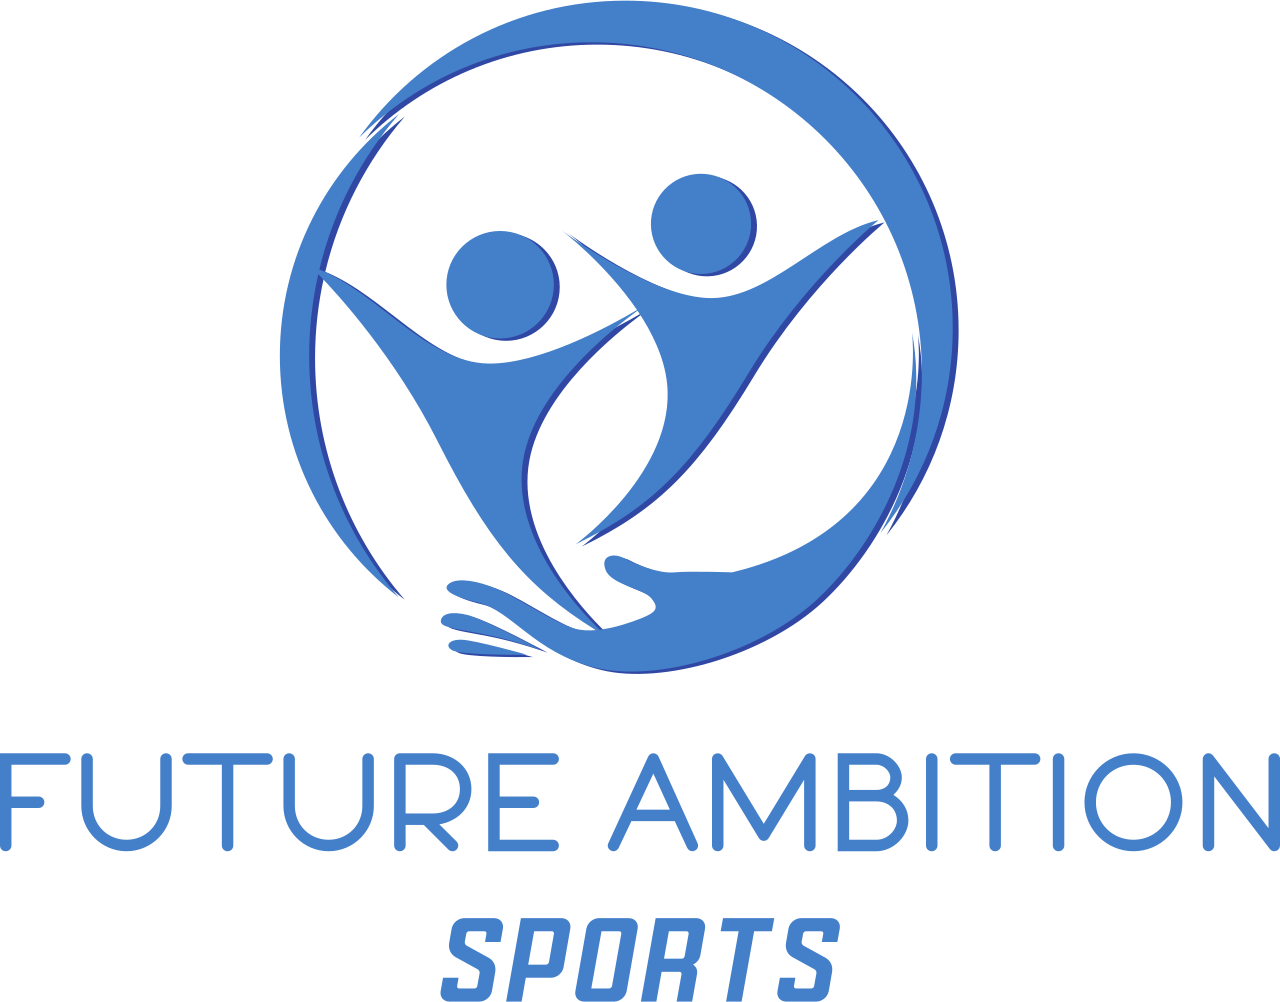 Future Ambition's logo